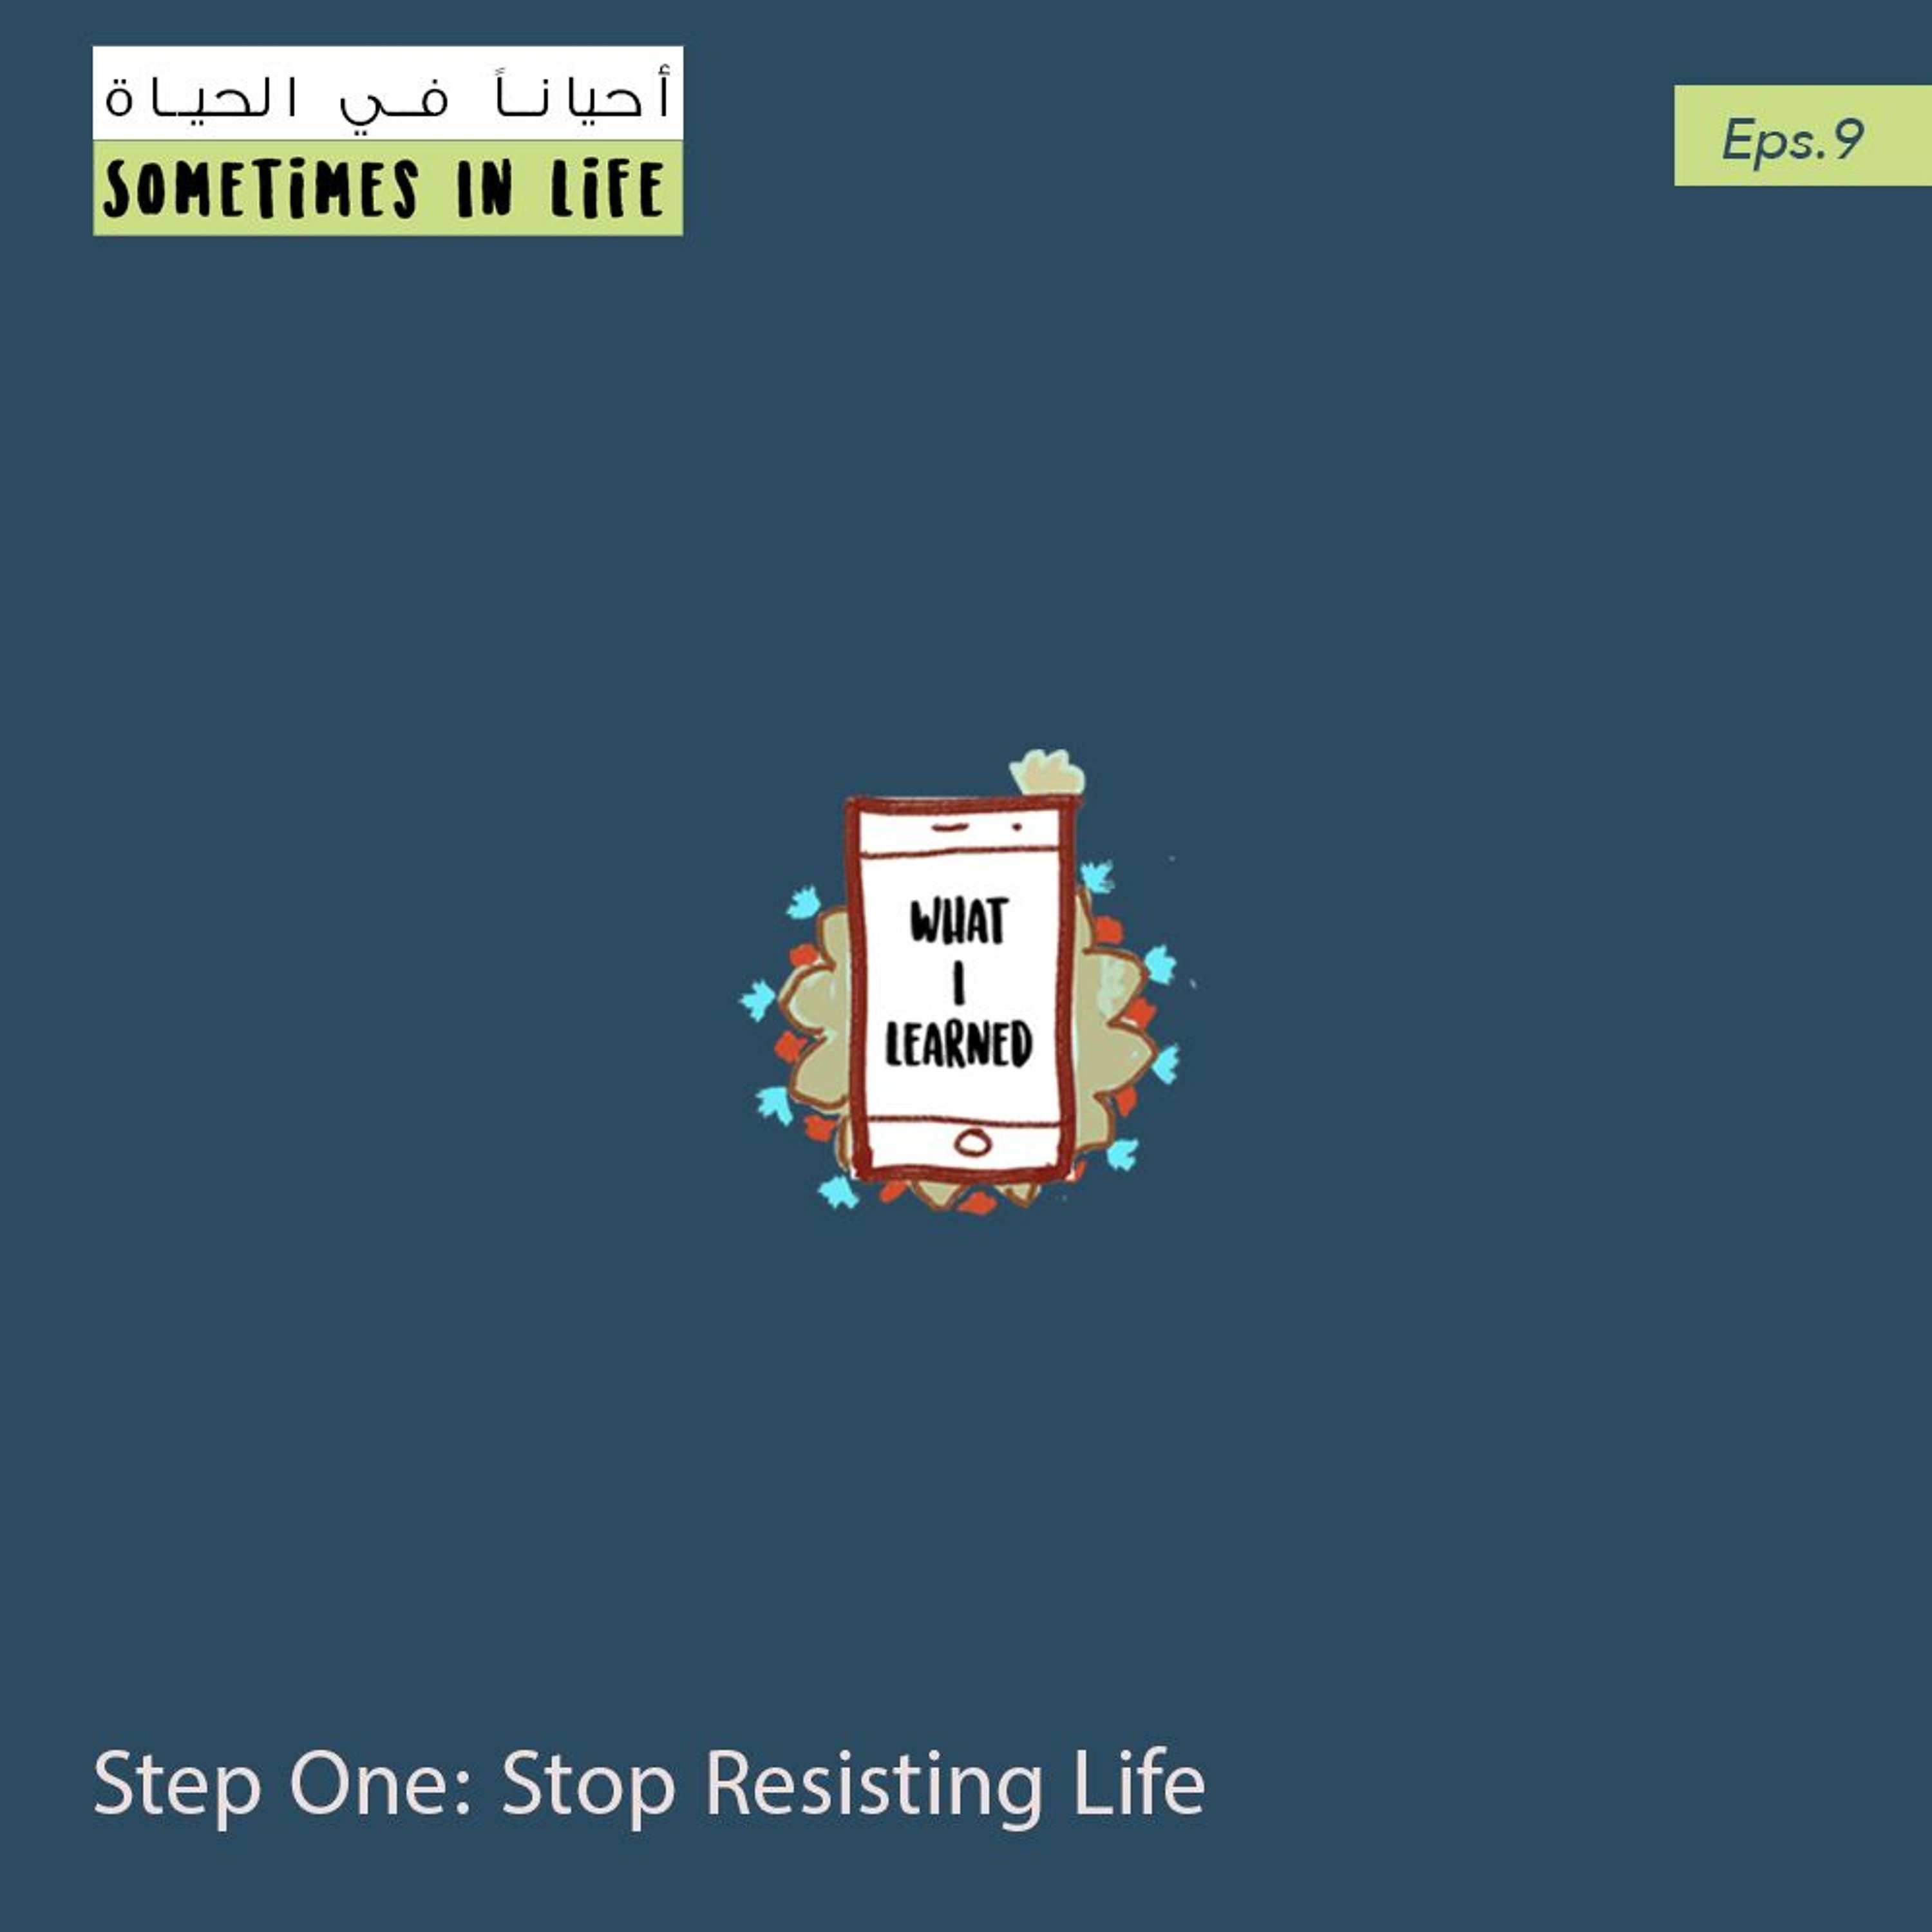 9: Step One: Stop Resisting Life